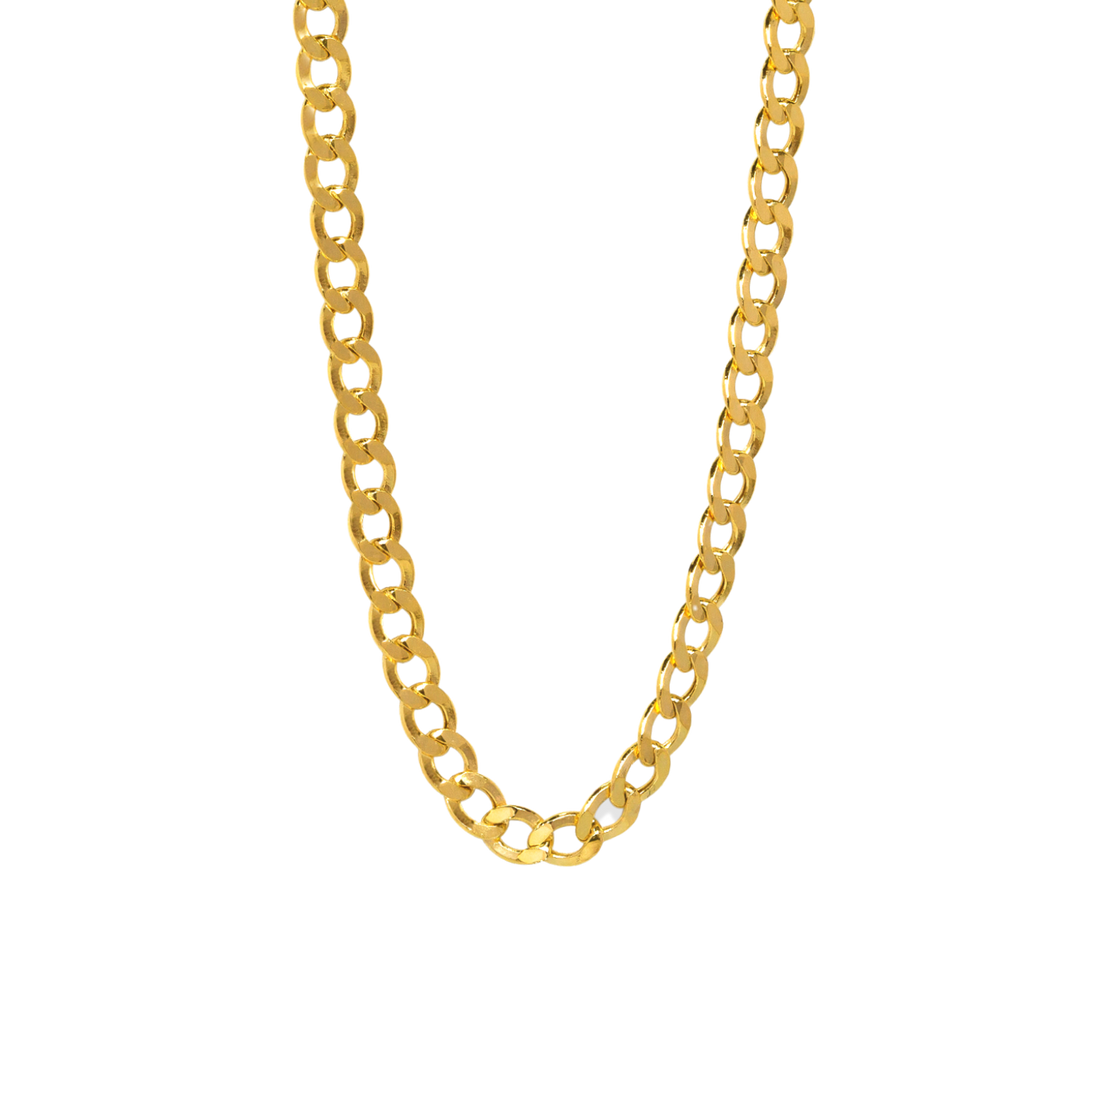 solid gold curb chain Canada, gold curb chain 5mm, mens gold chains canada